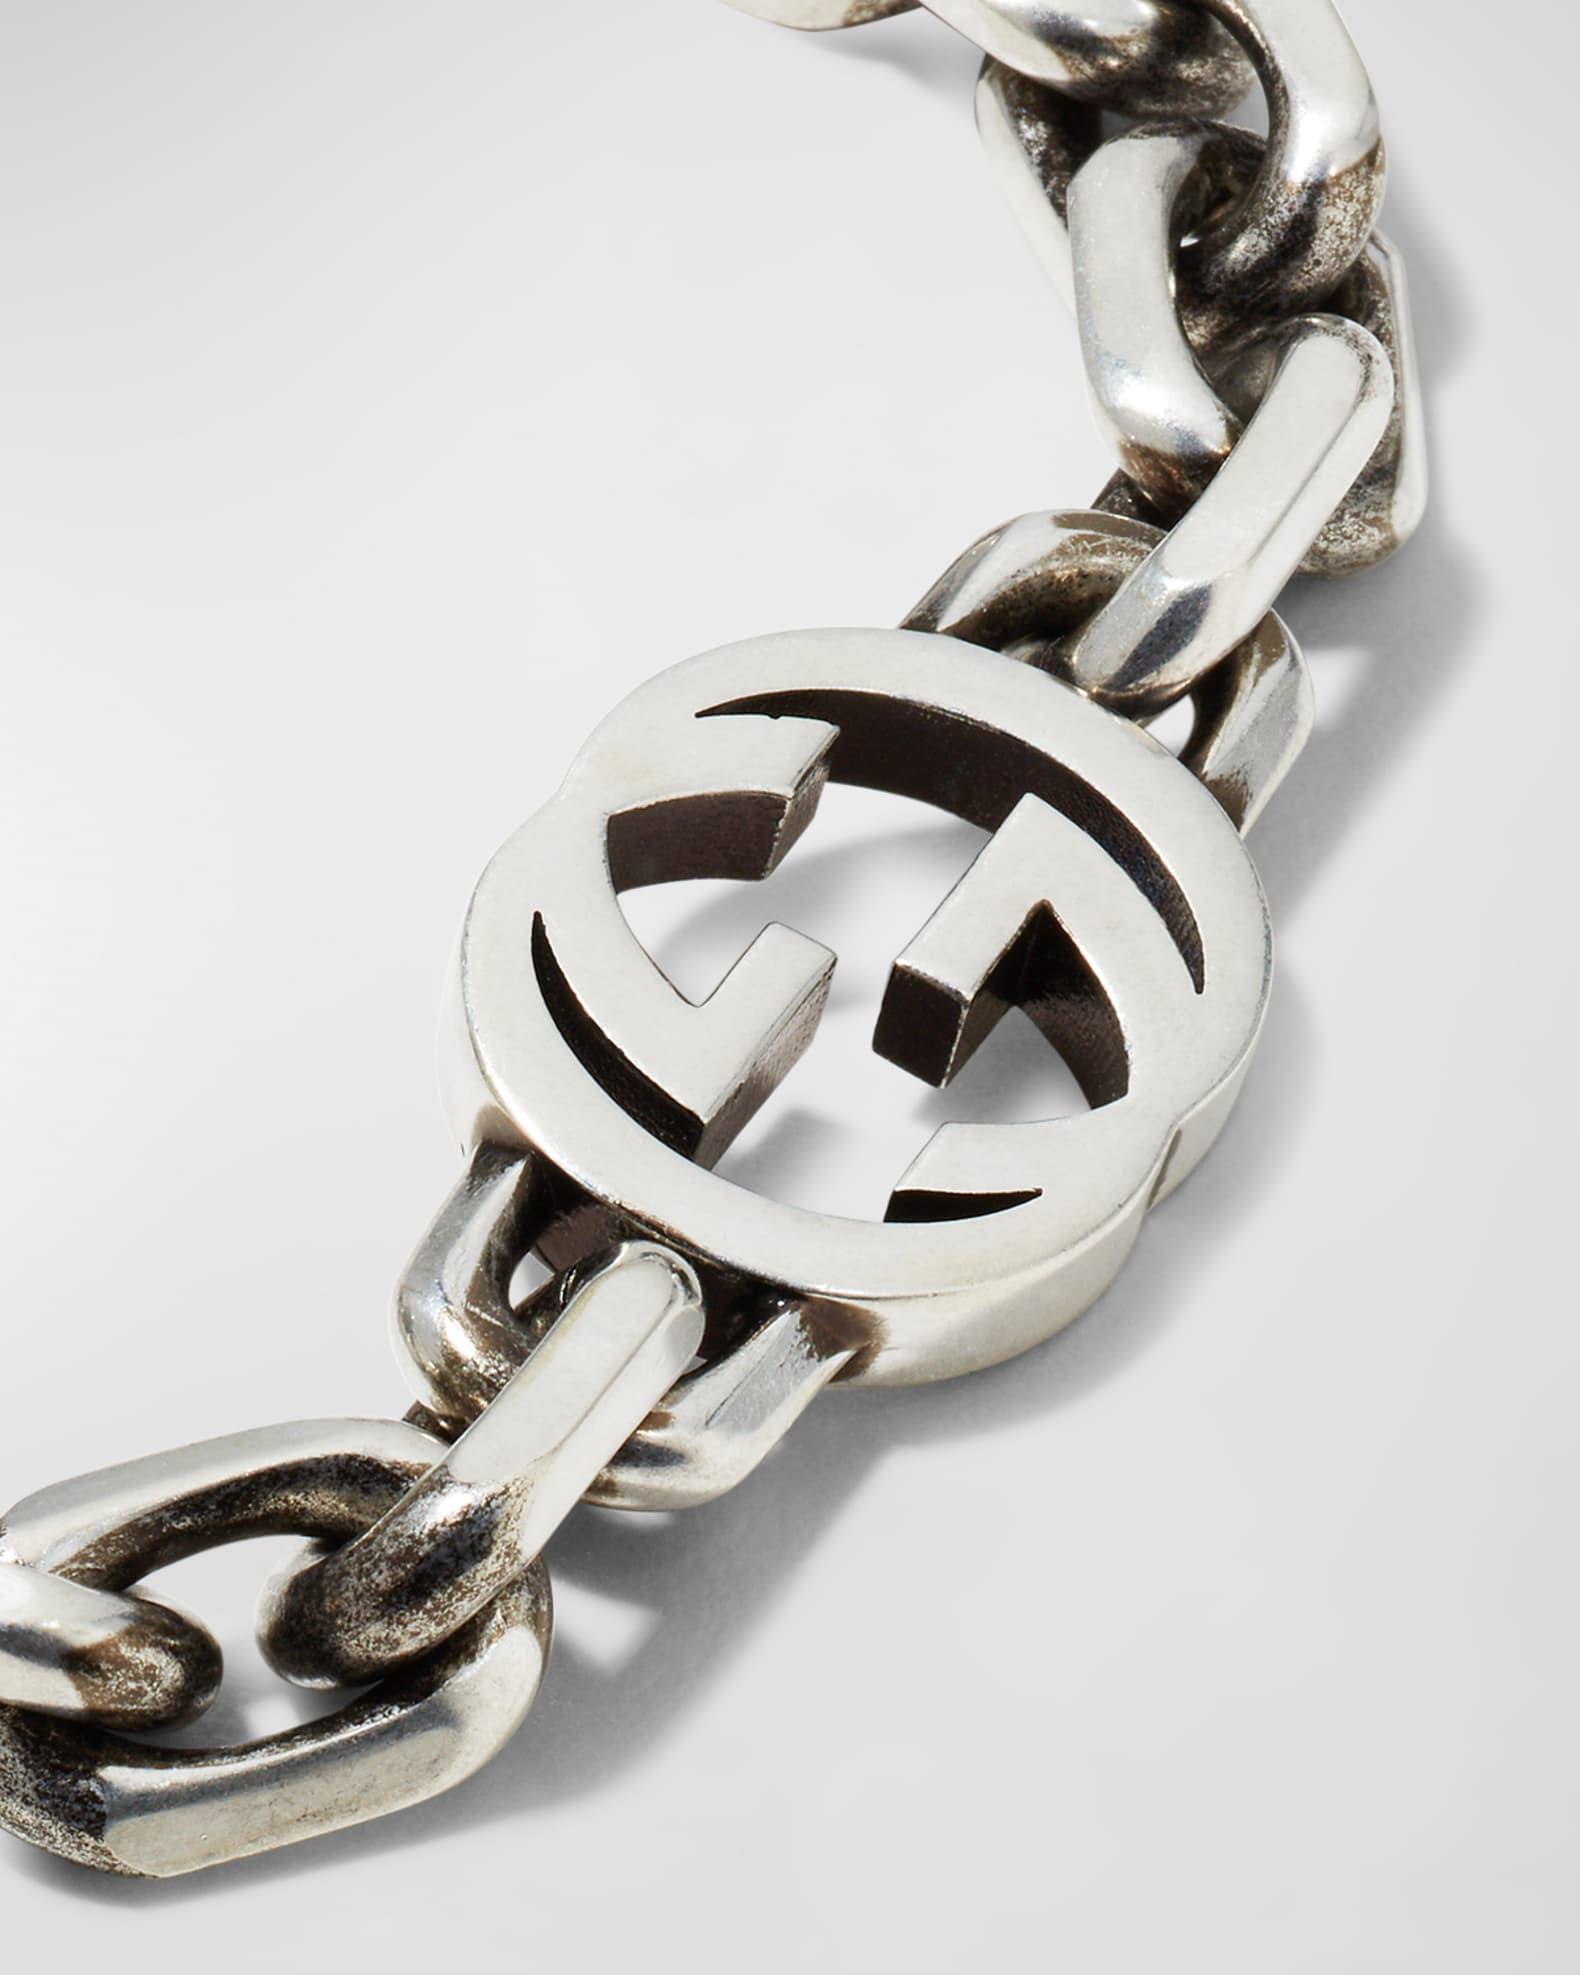 Gucci Silver Bracelet with Interlocking GG Charm –